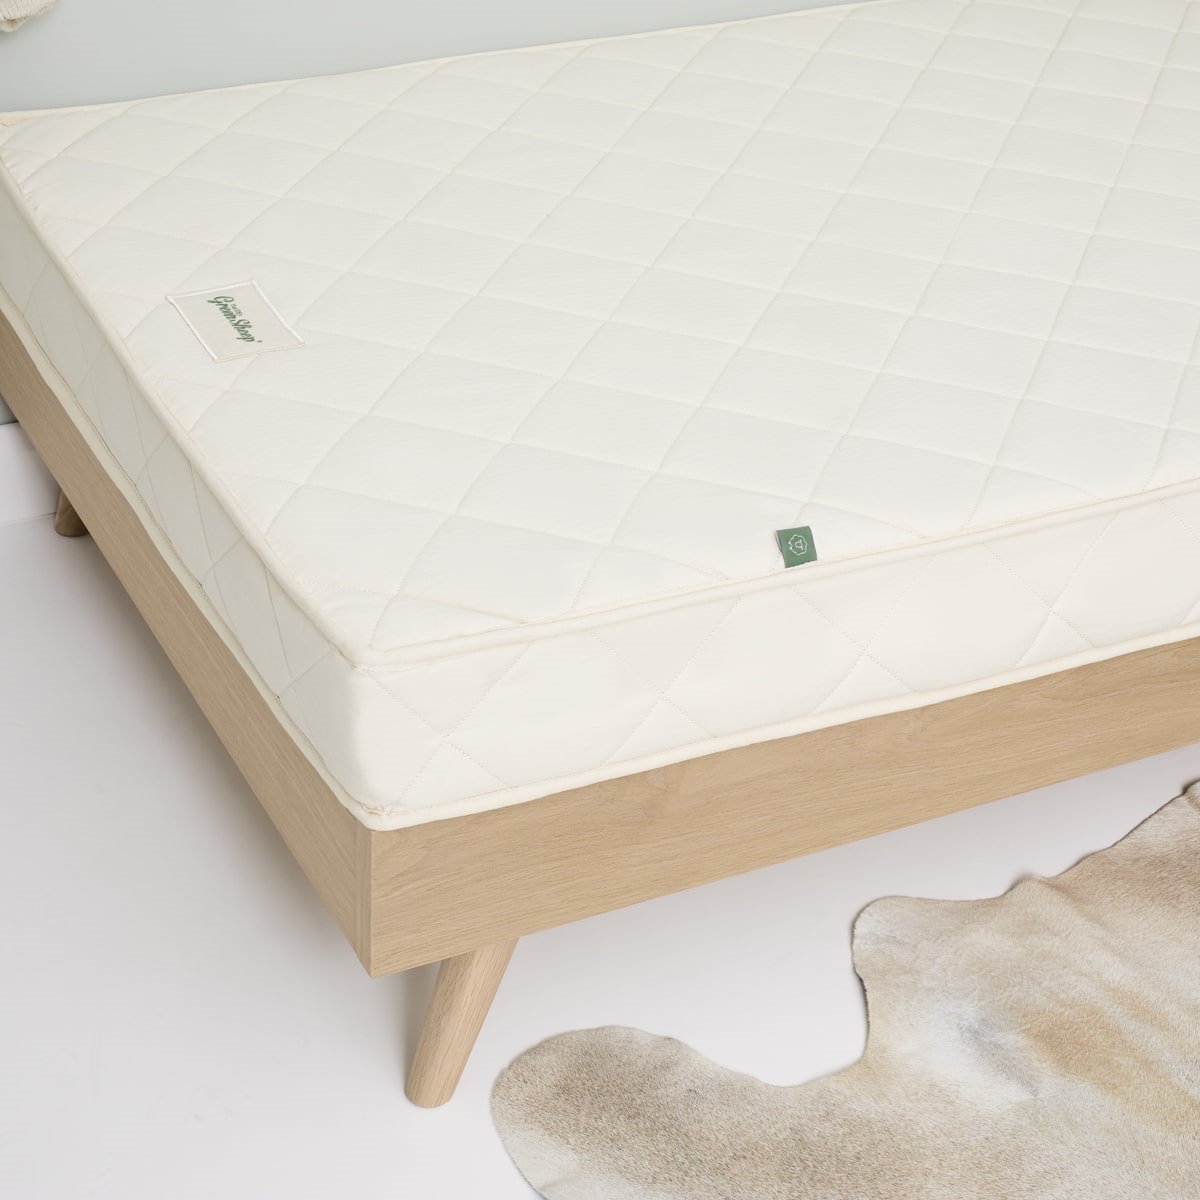 ikea vyssa extendable mattress